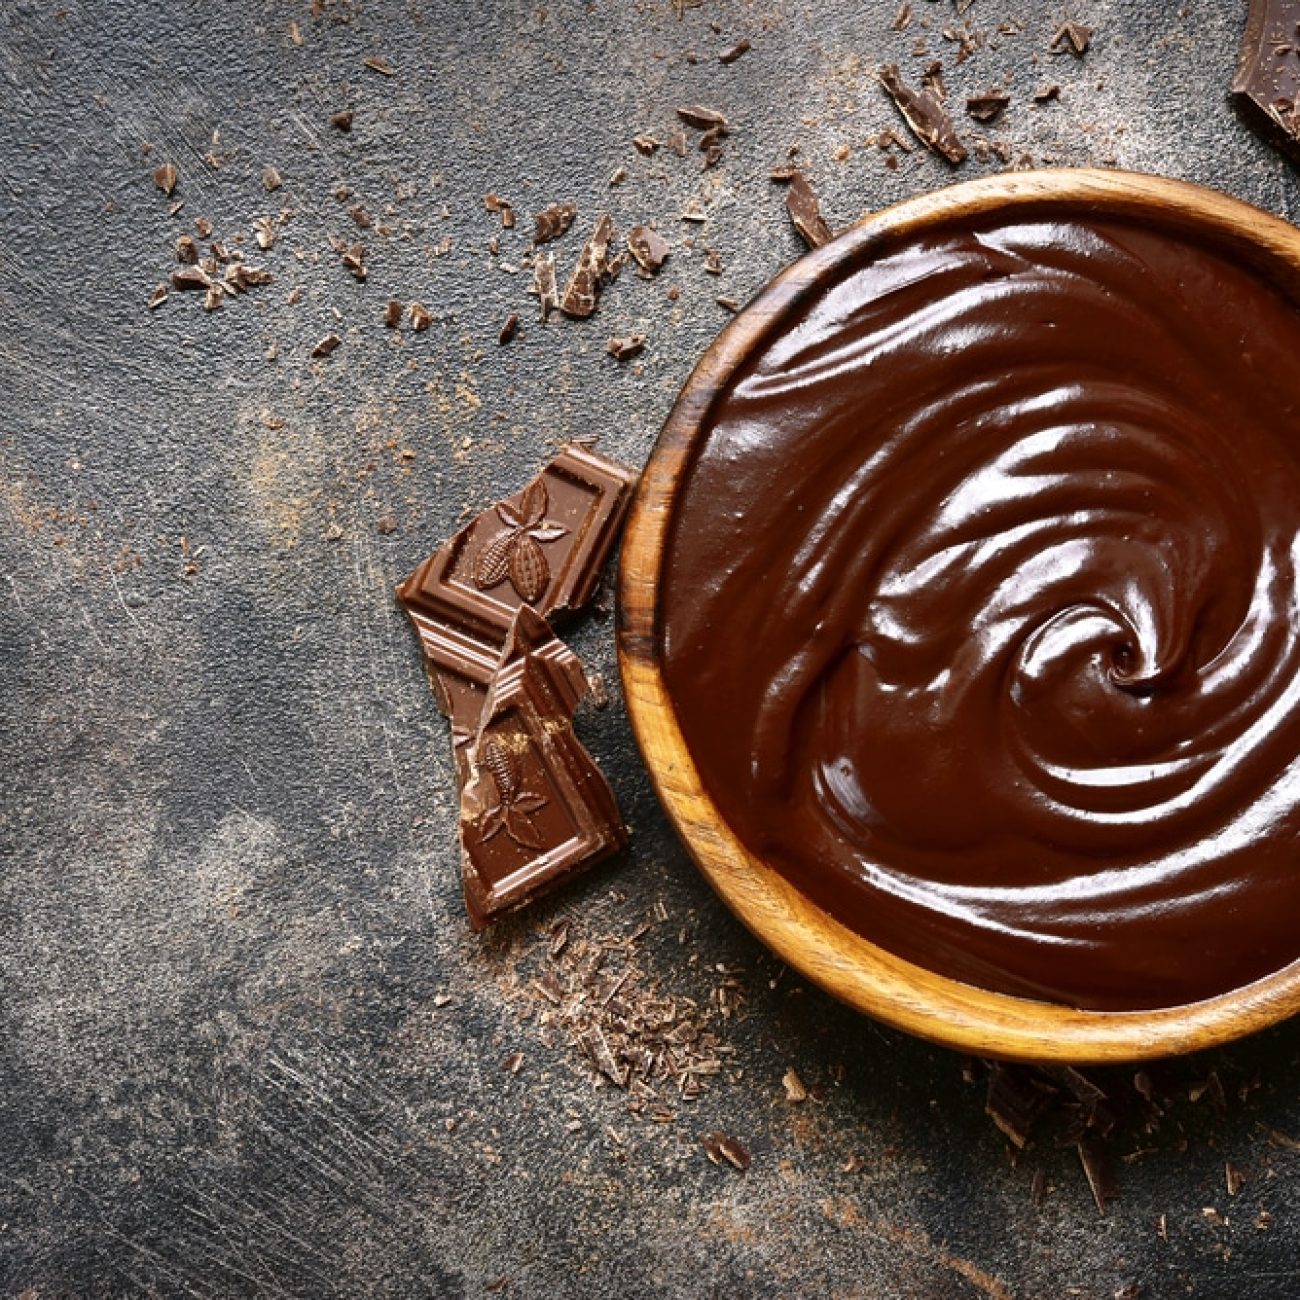 Sugar-Free Chocolate Syrup Made with Stevia – A Healthy Alternative